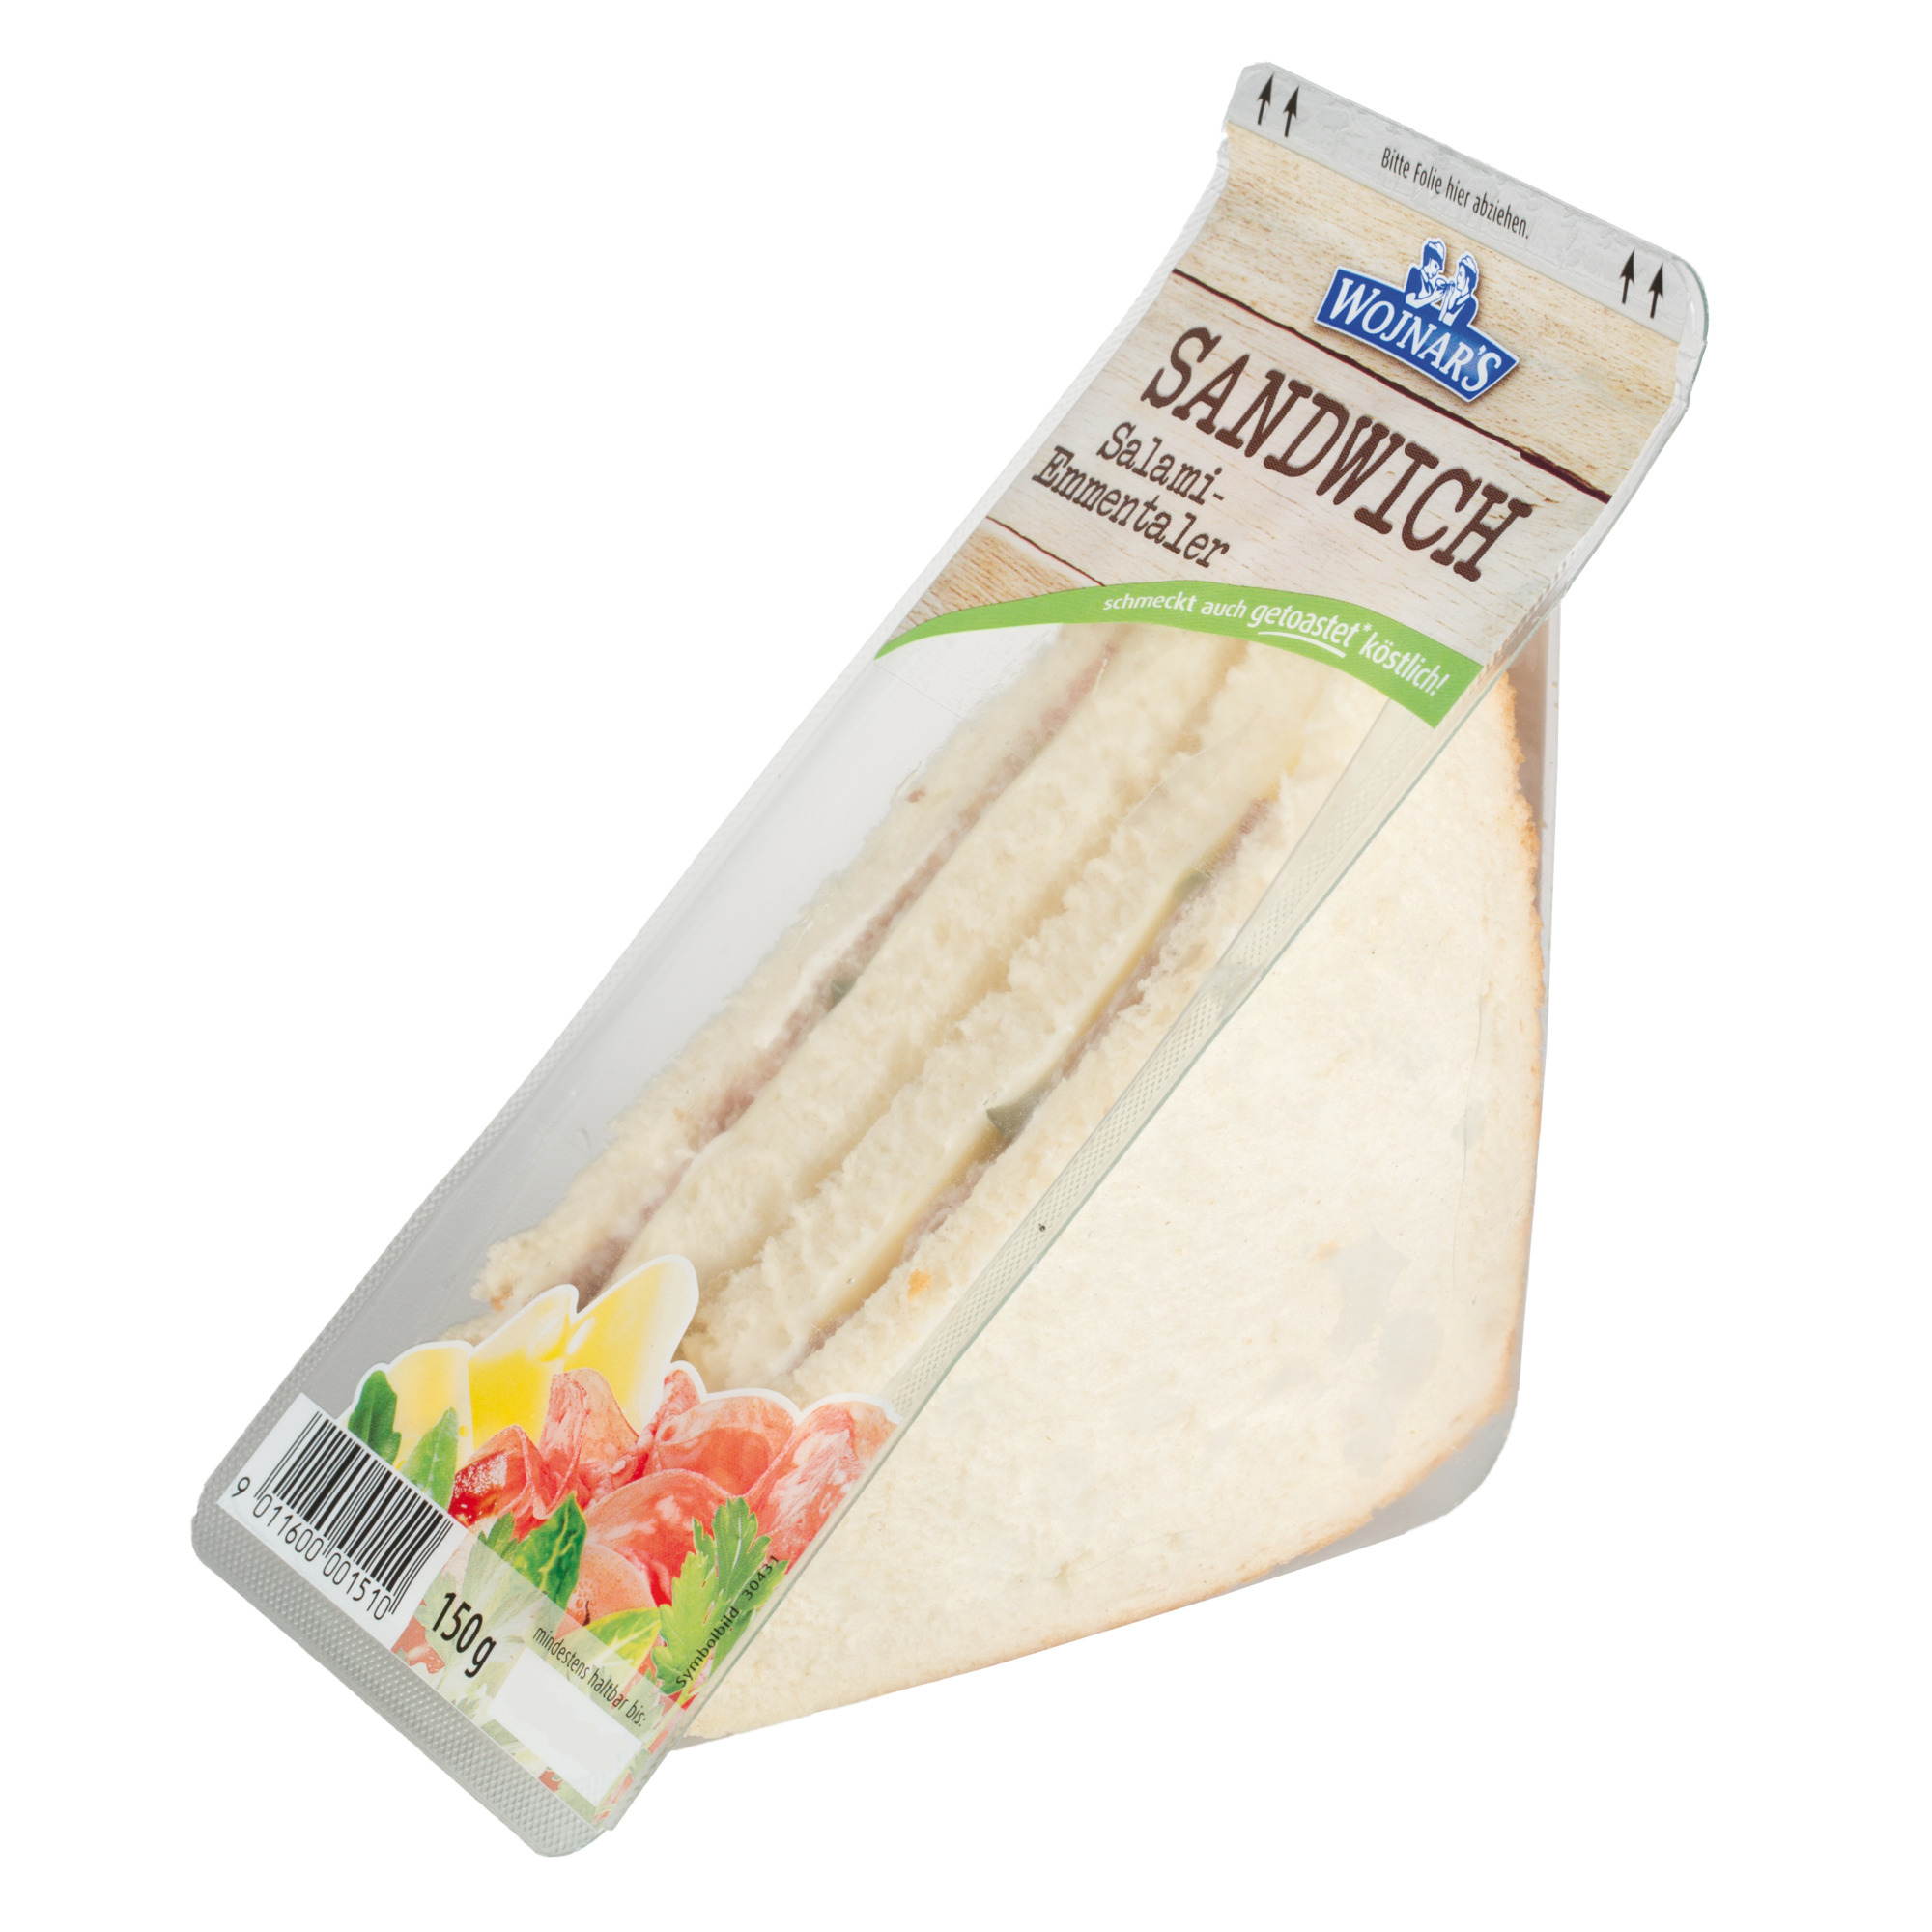 Wojnar's Sandwich 150g, Salami Emmentale